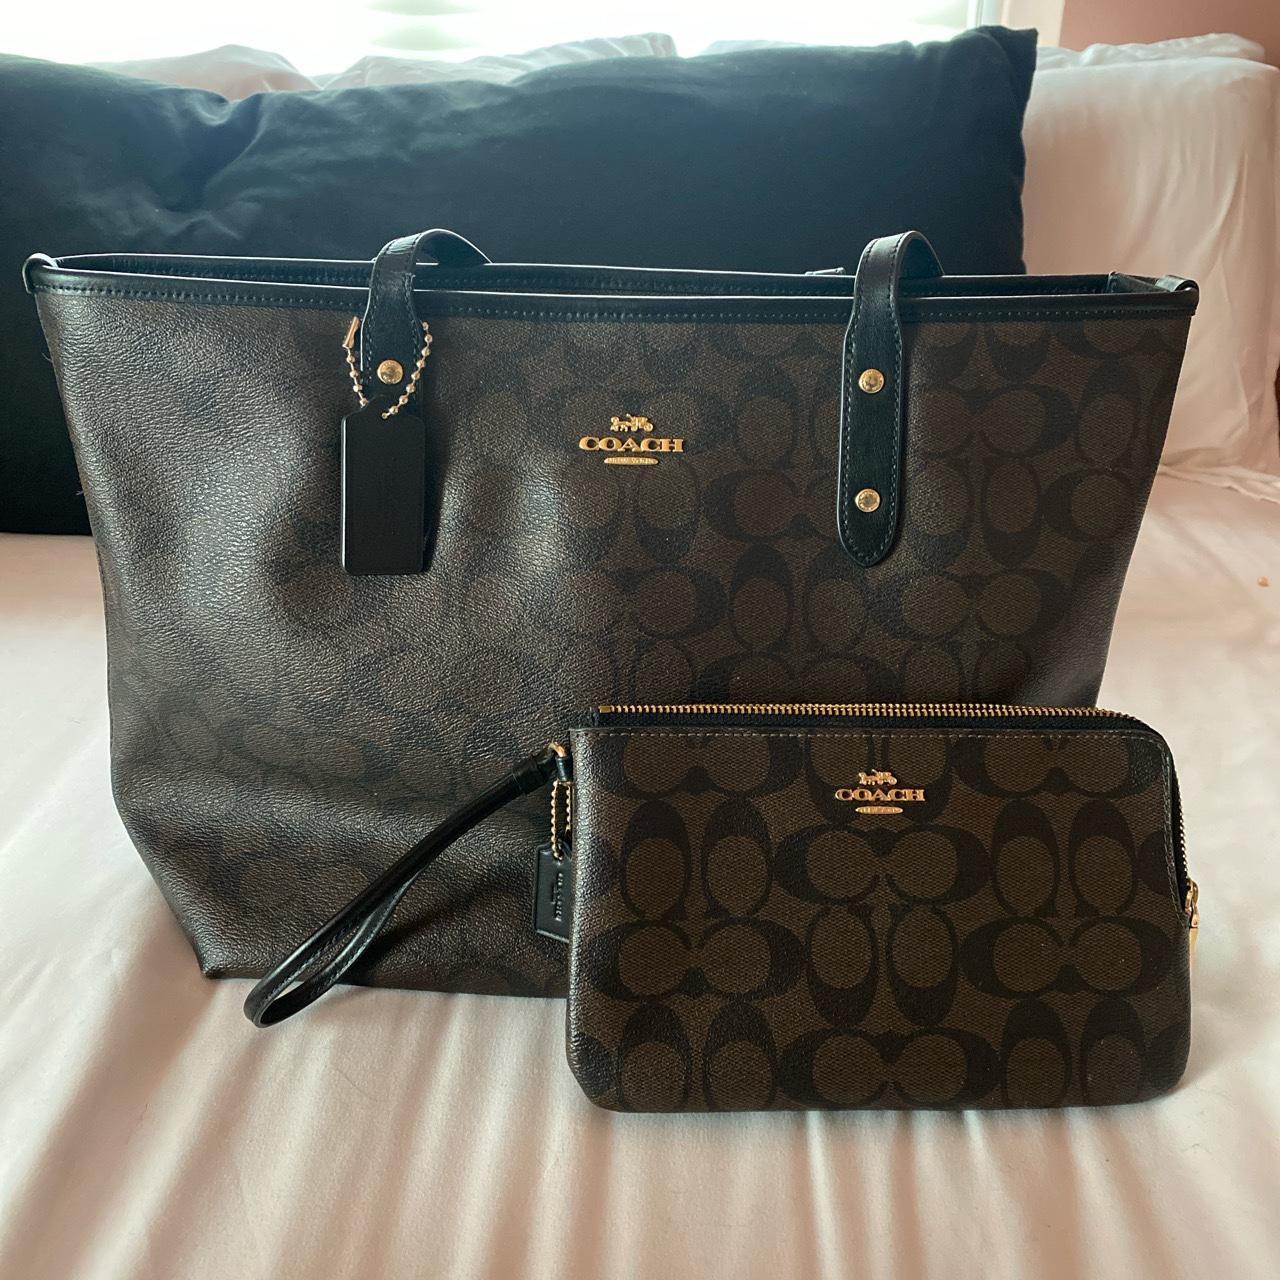 Coach Handbag With Matching Wallet 